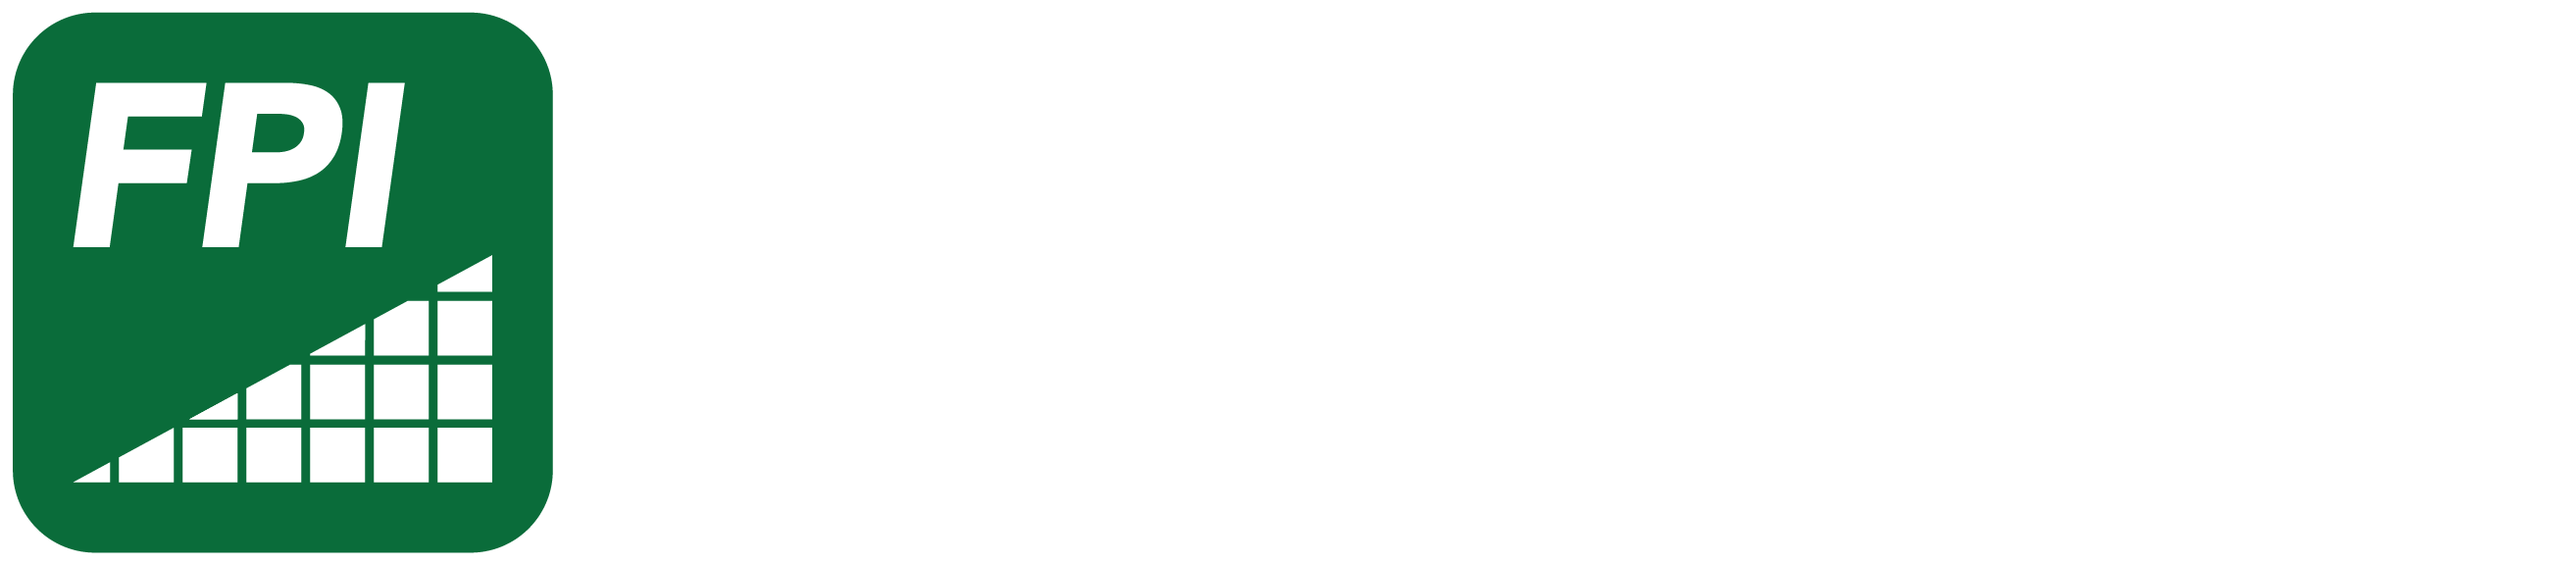 Flexible Plan Investments logo 